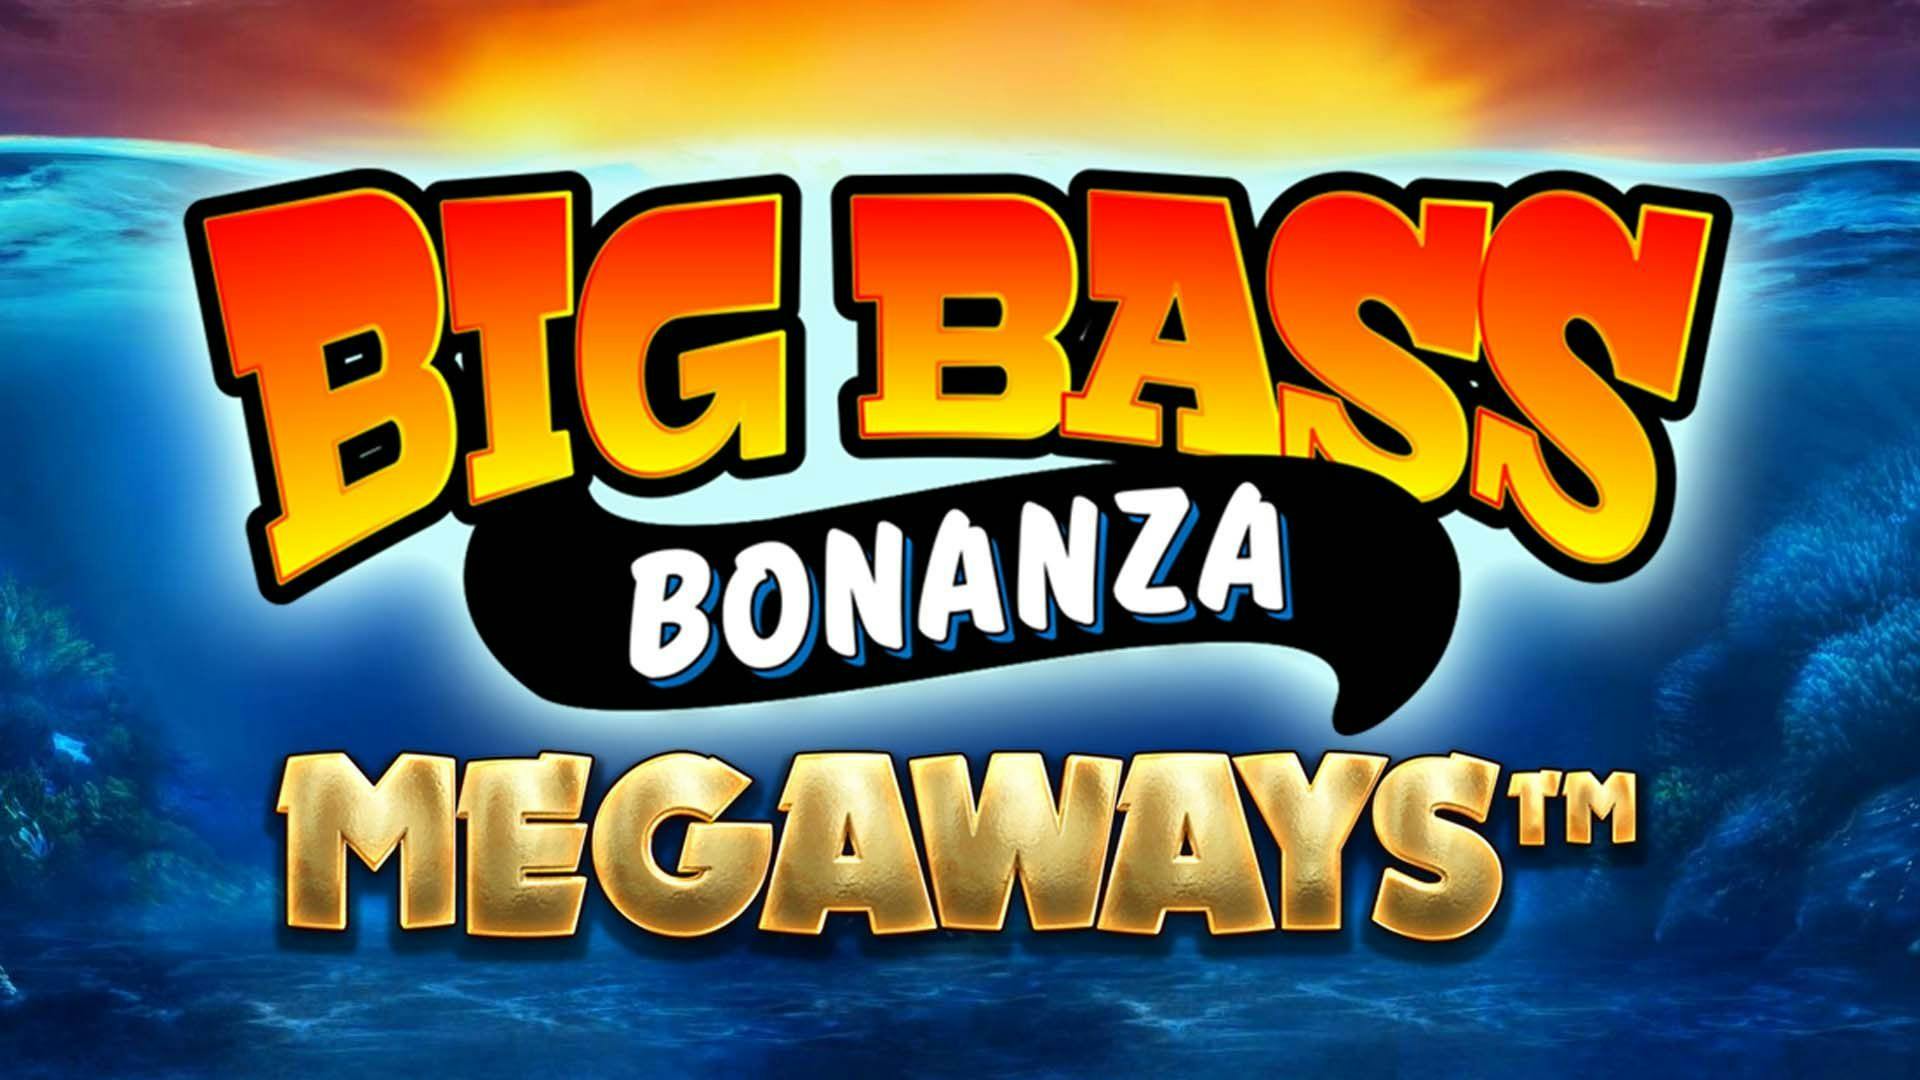 Big Bass Bonanza Megaways Slot Machine Online Free Play